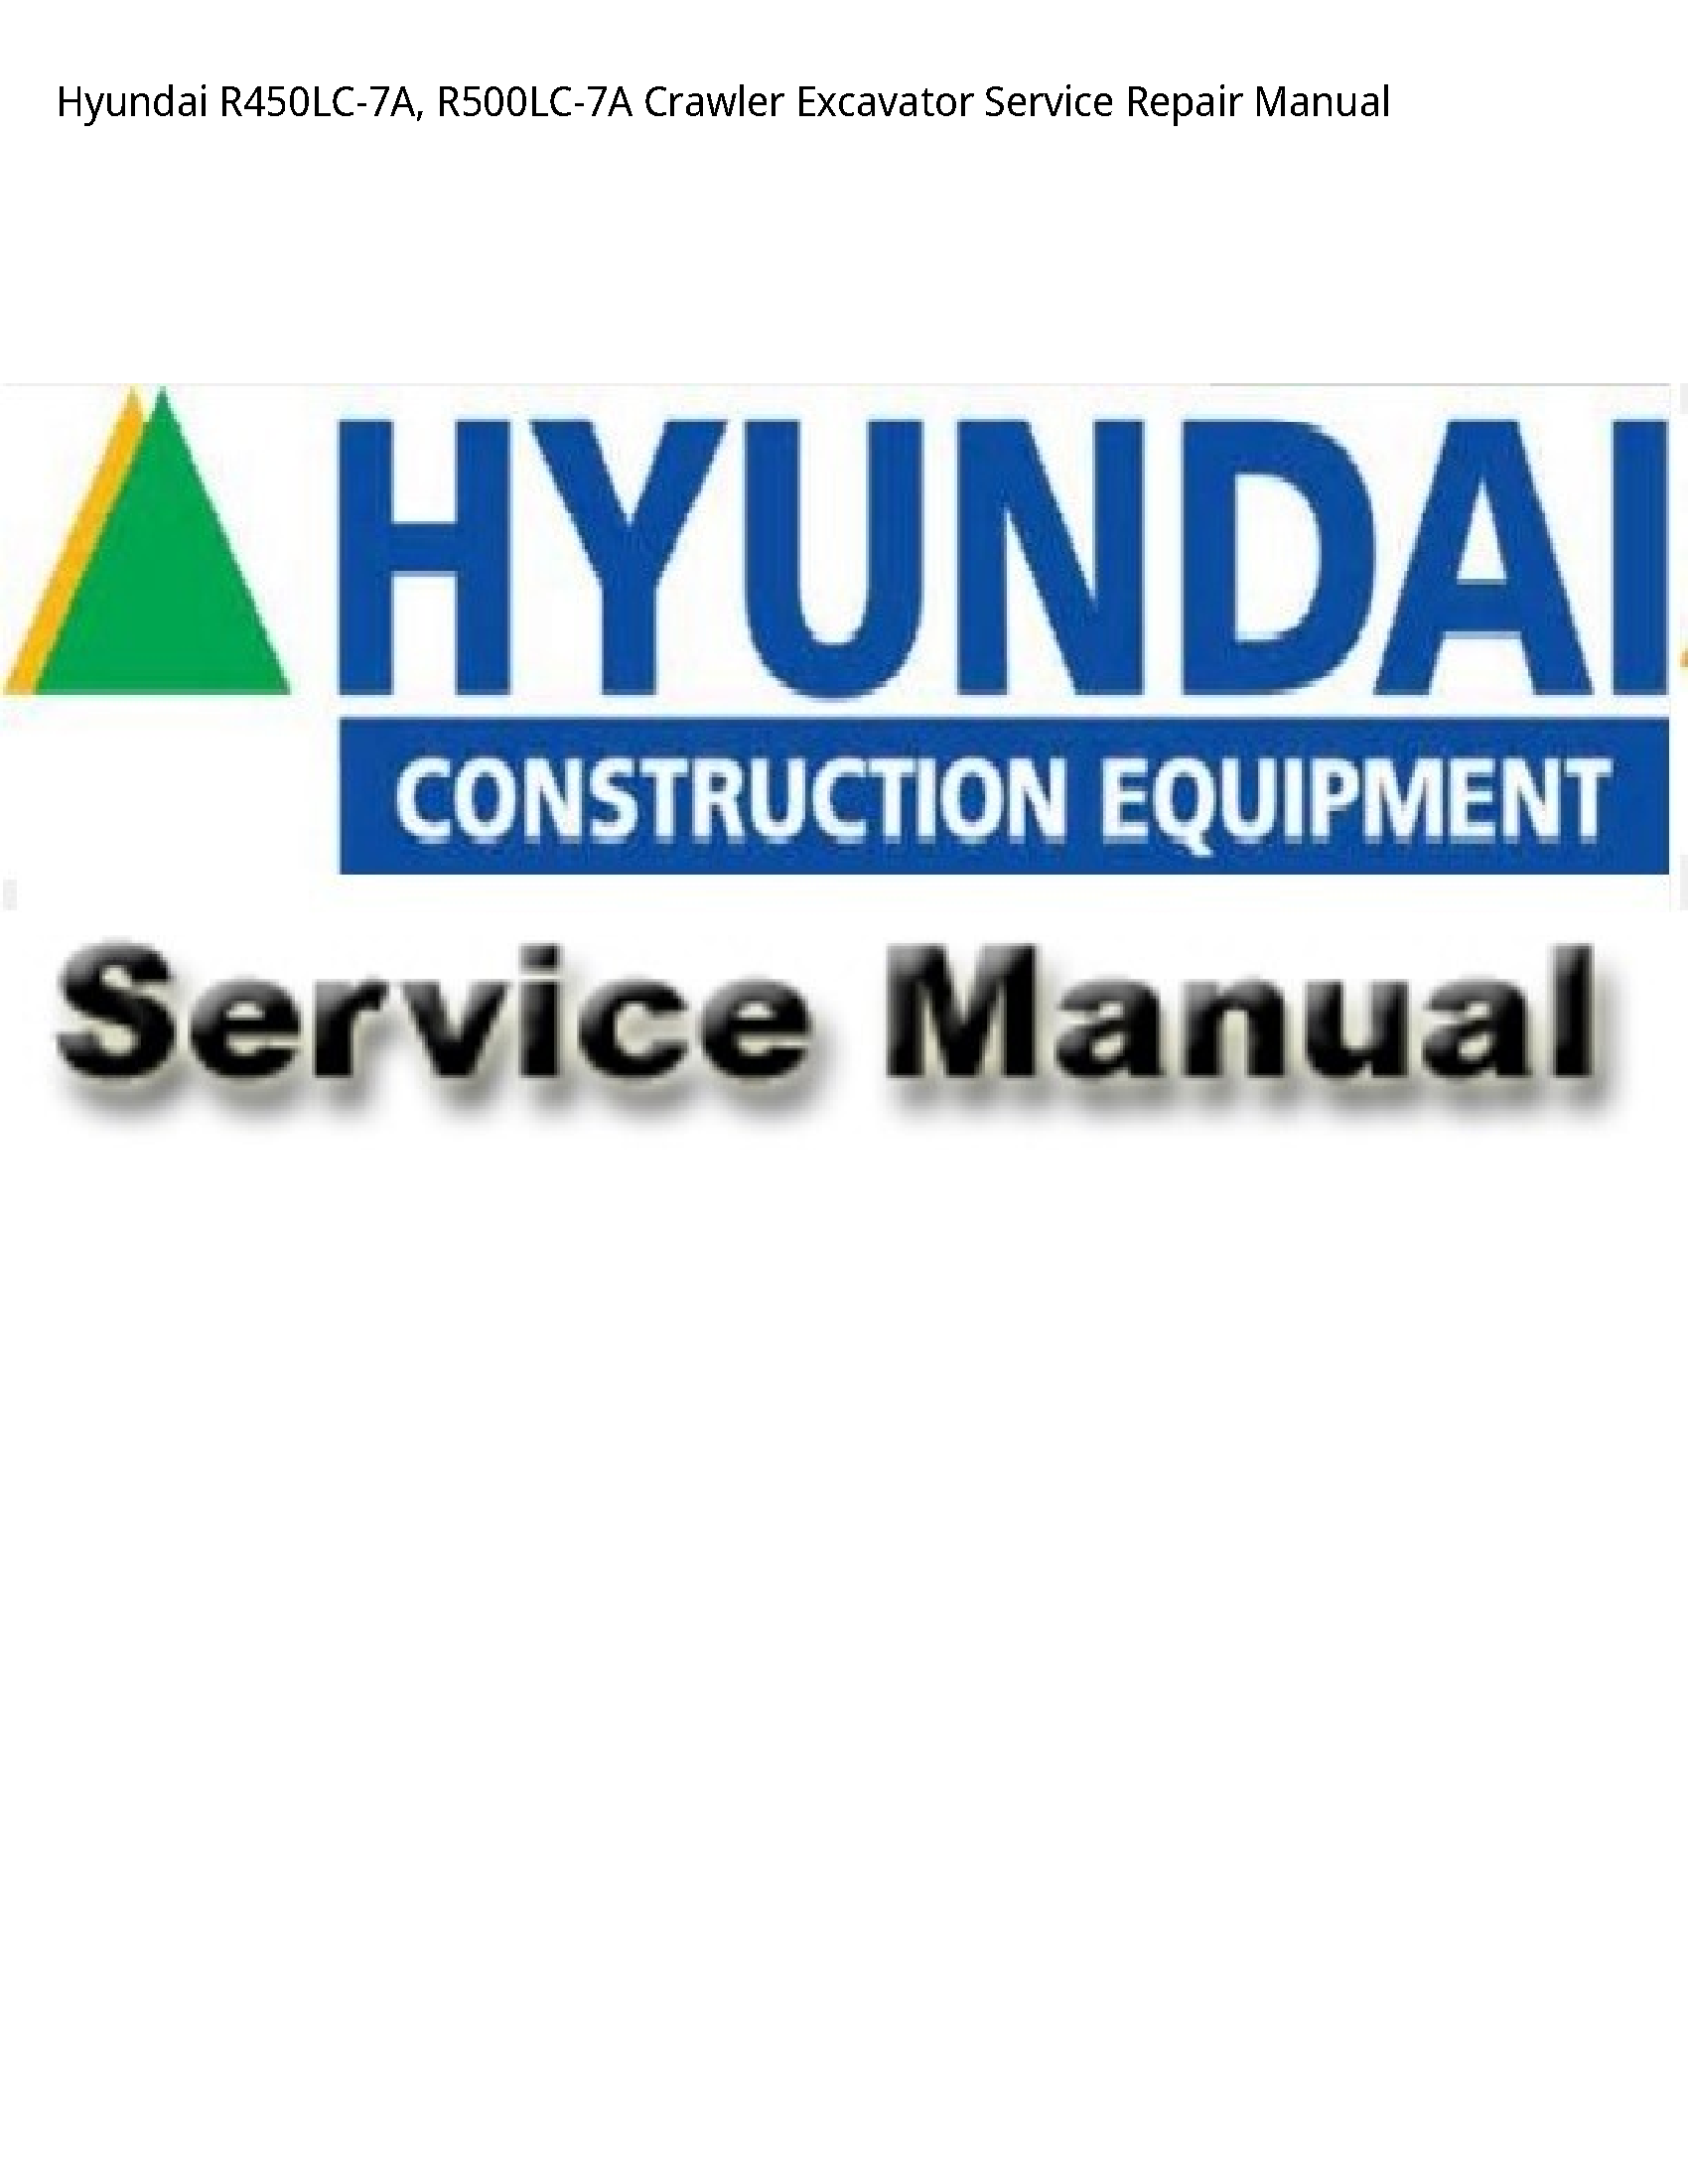 Hyundai R450LC-7A Crawler Excavator manual